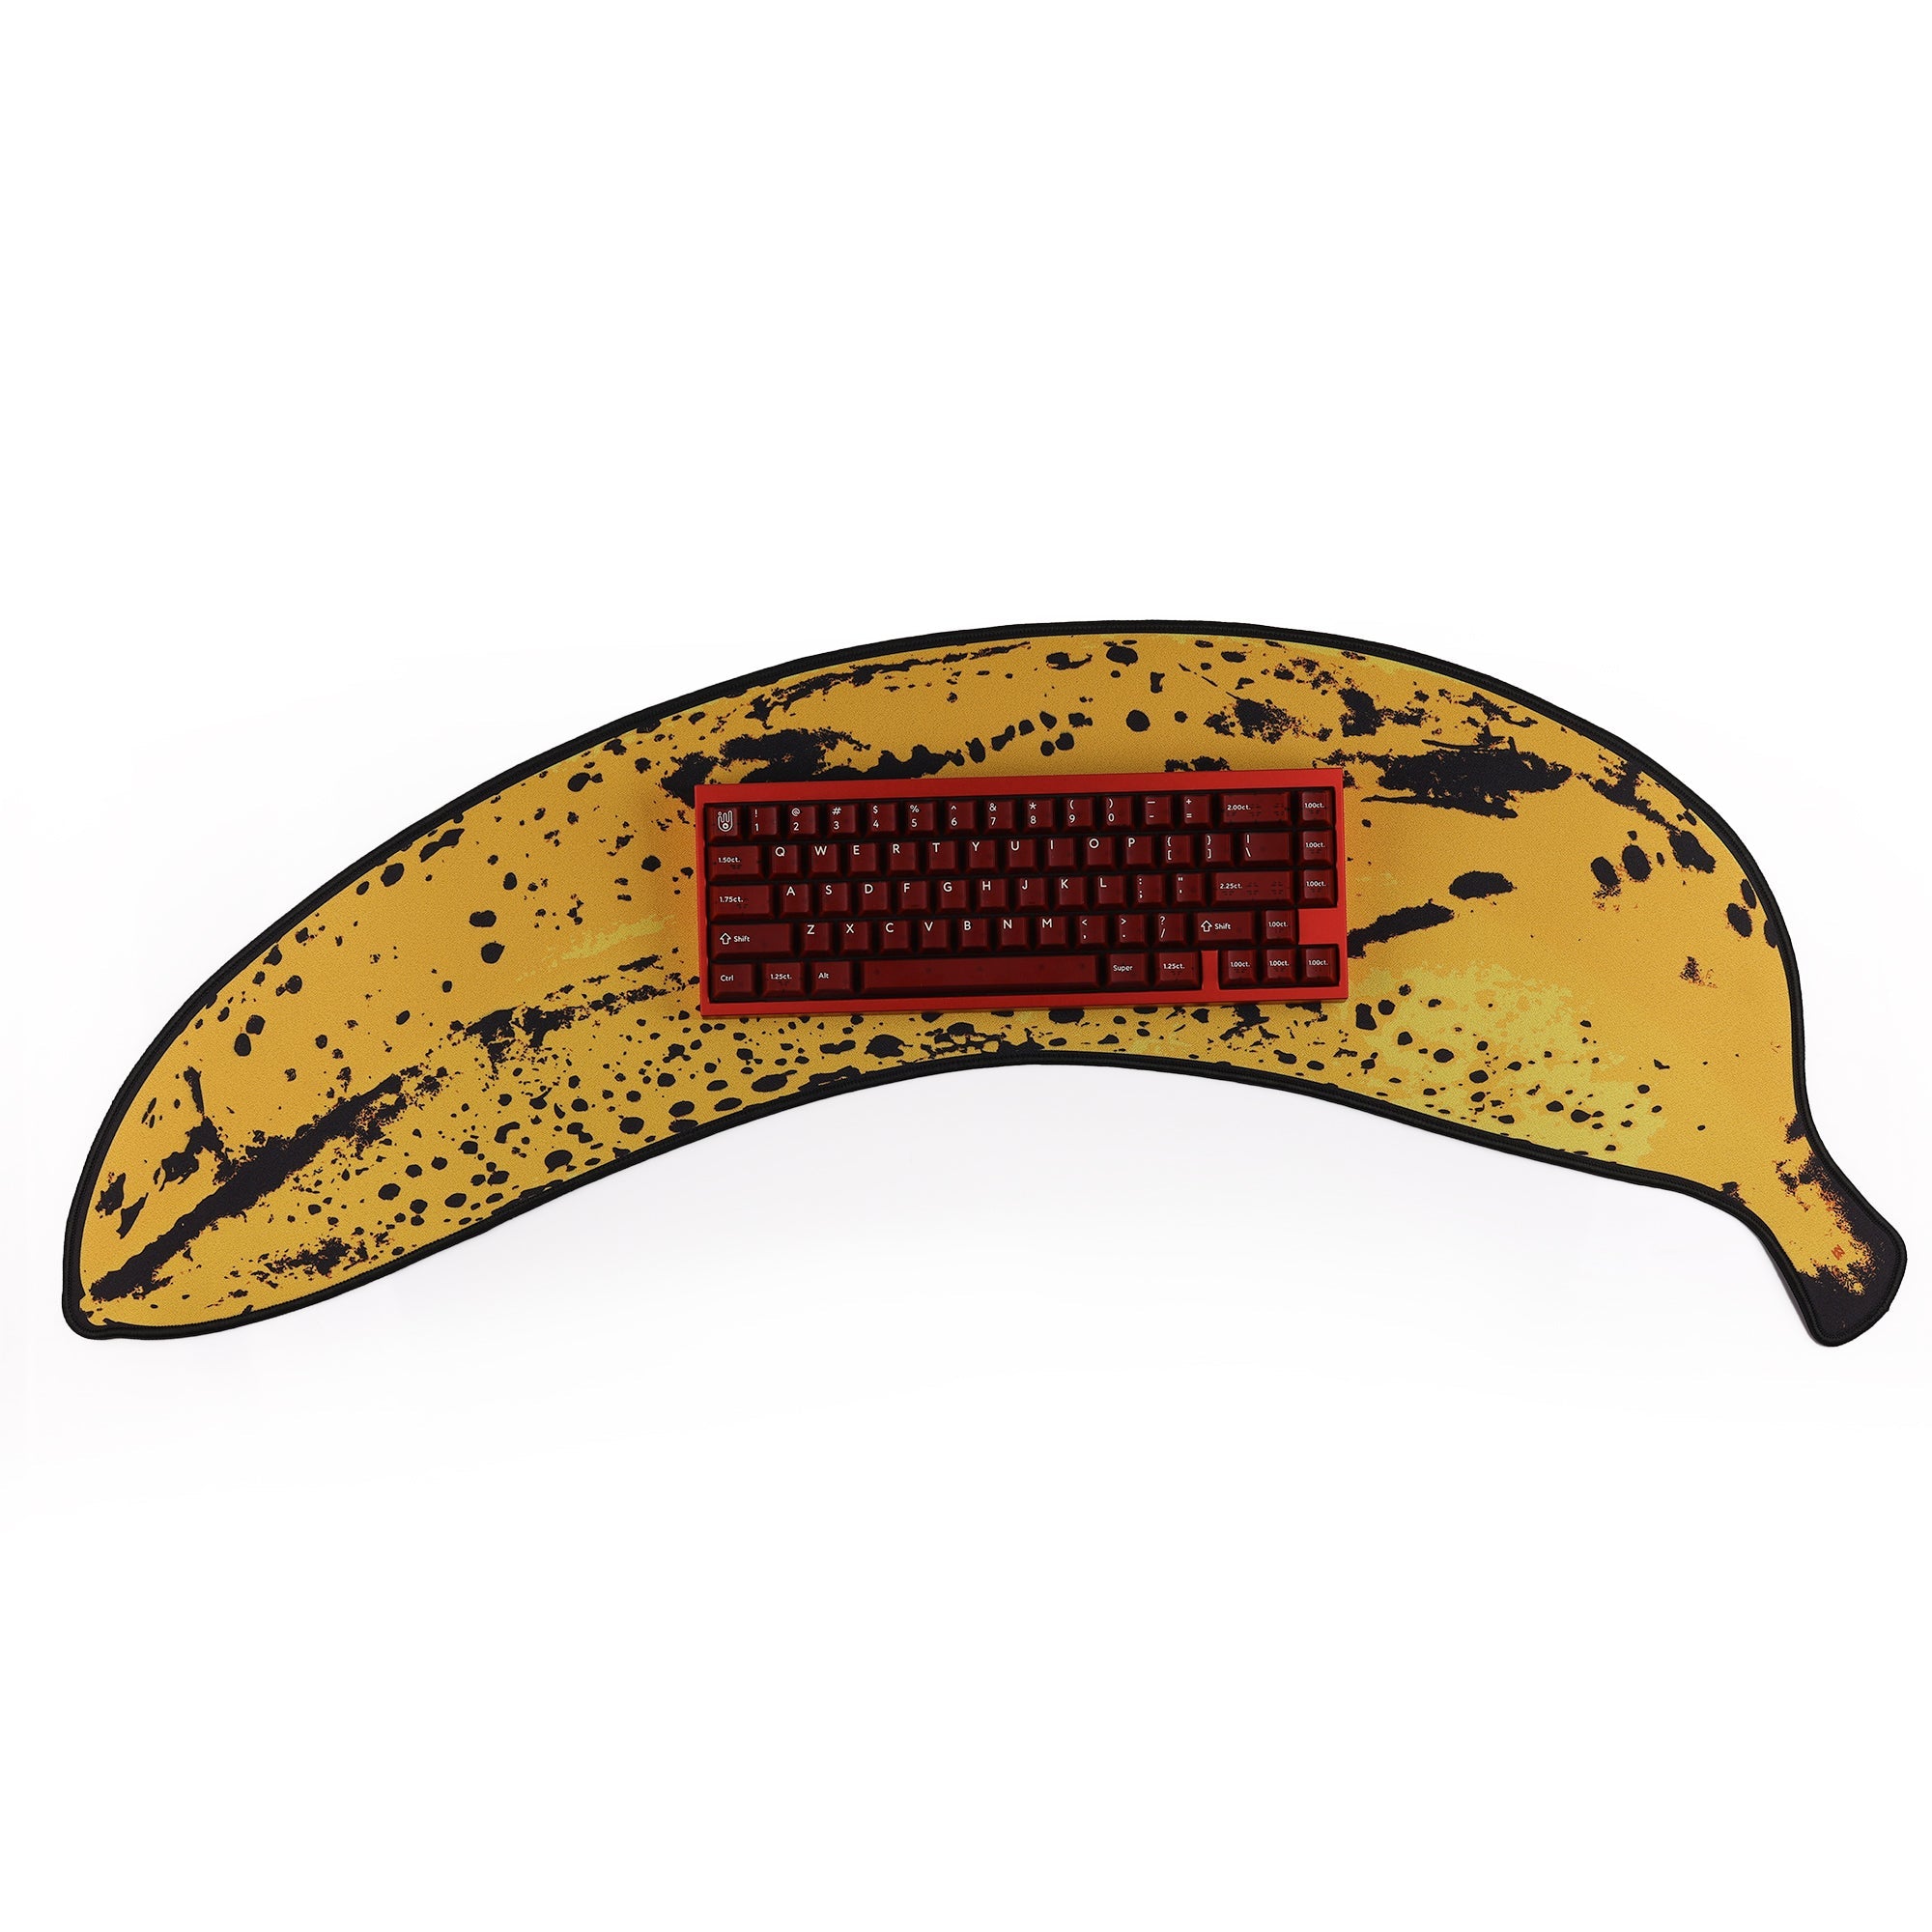 KBDfans Custom Keyboard Banana Deskmat